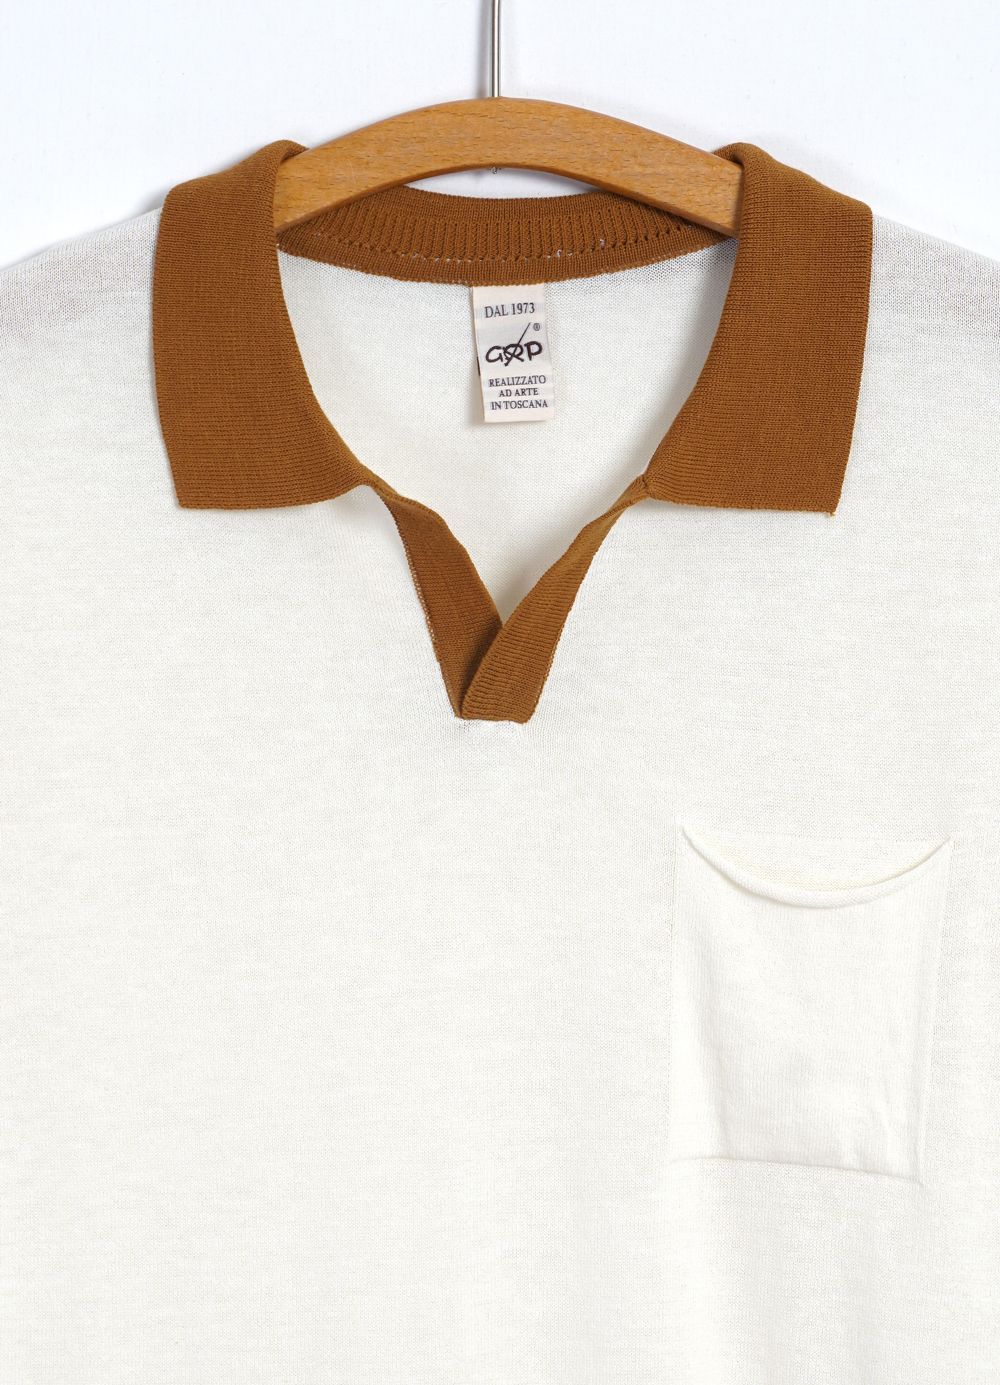 G.R.P - POLO | Short Sleeve Knit Shirt | Ecru Tobacco - HANSEN Garments